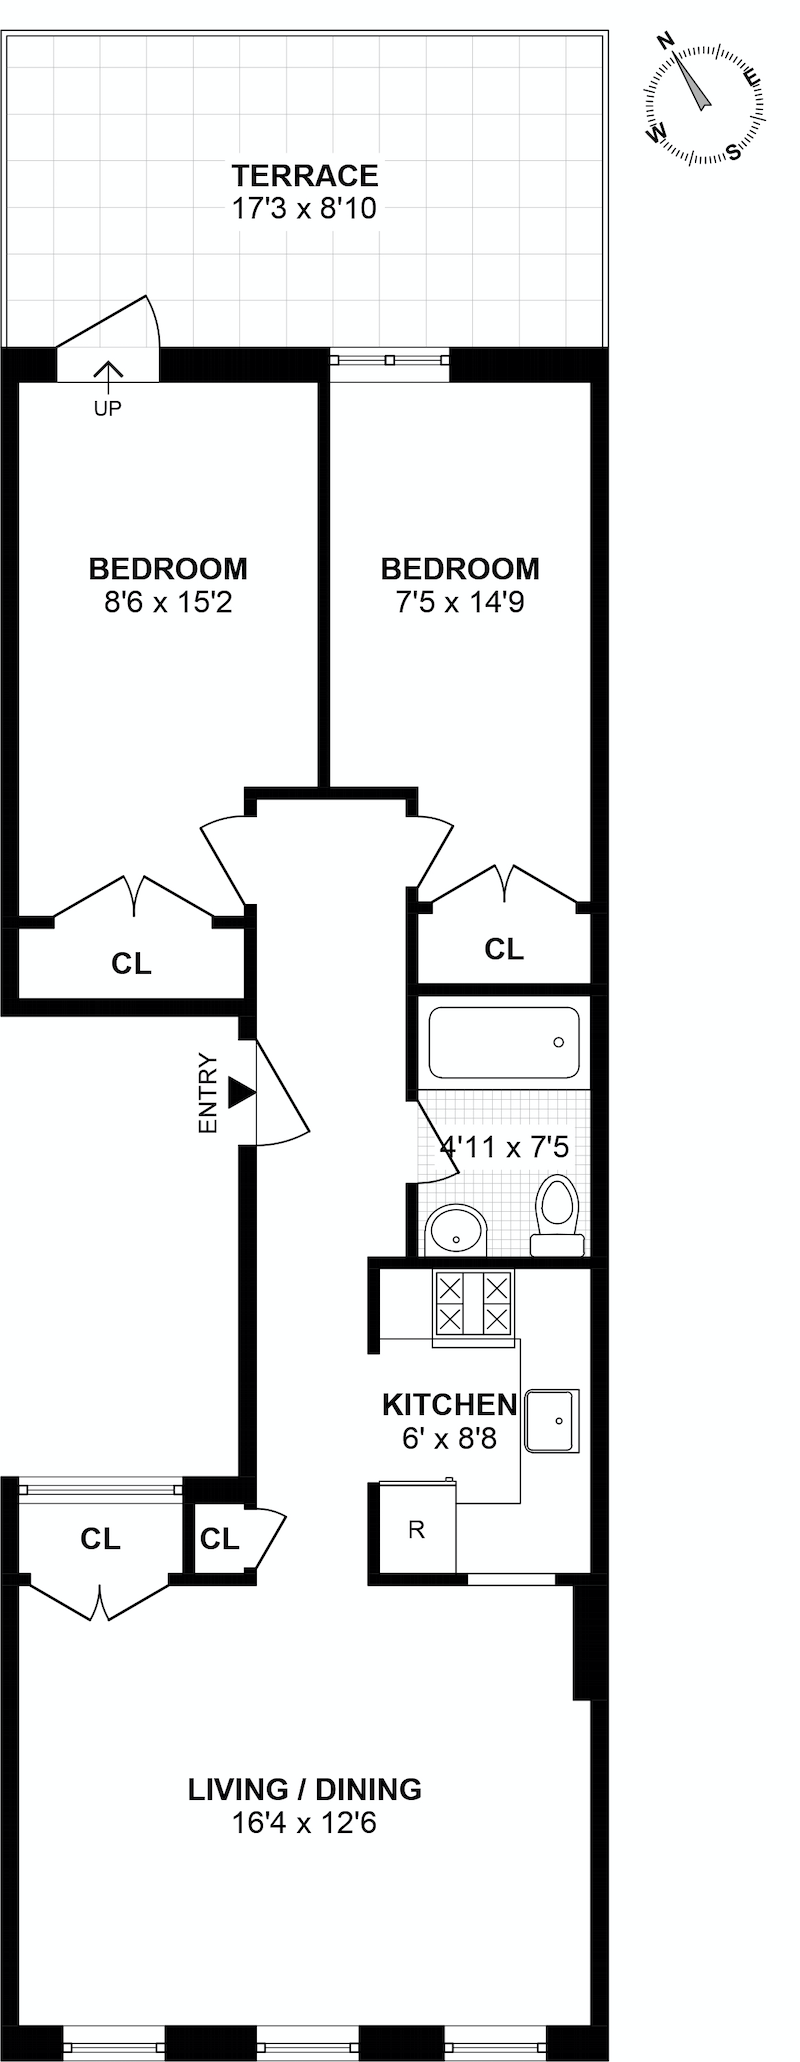 Floorplan for 265 West 113th Street, 2